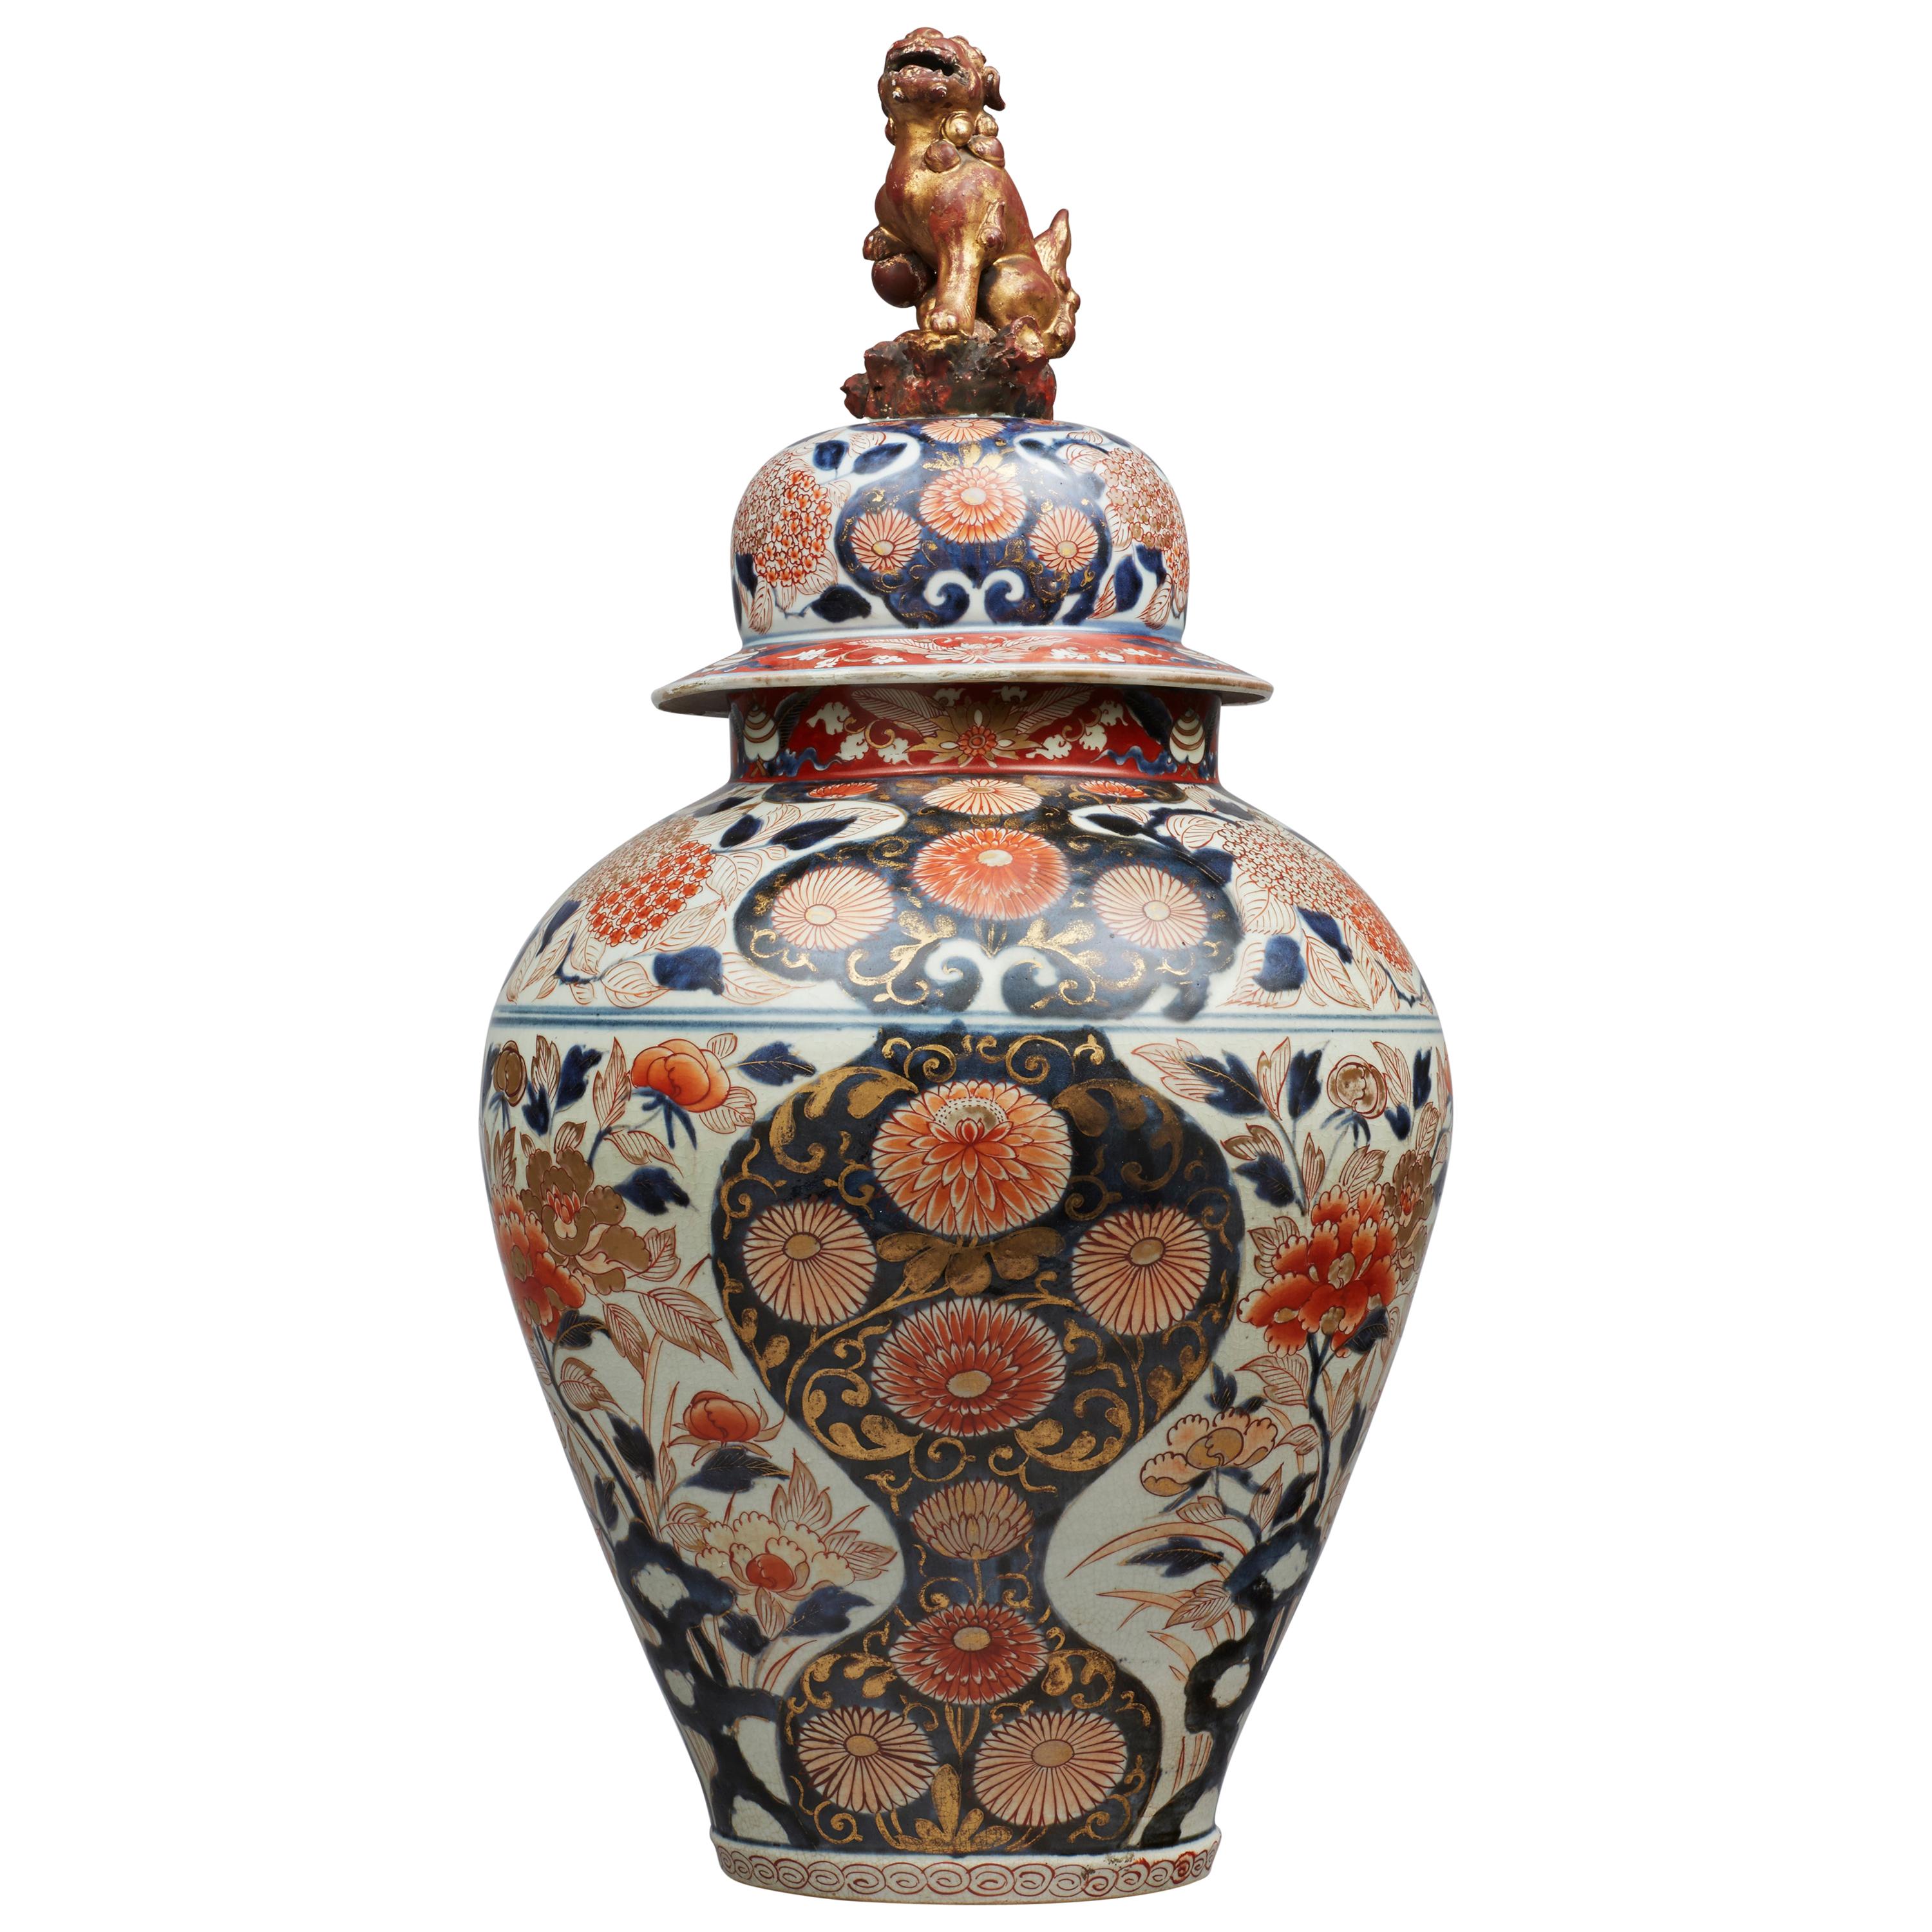 Imari Porcelain Vase and Cover from Japan, circa 1700